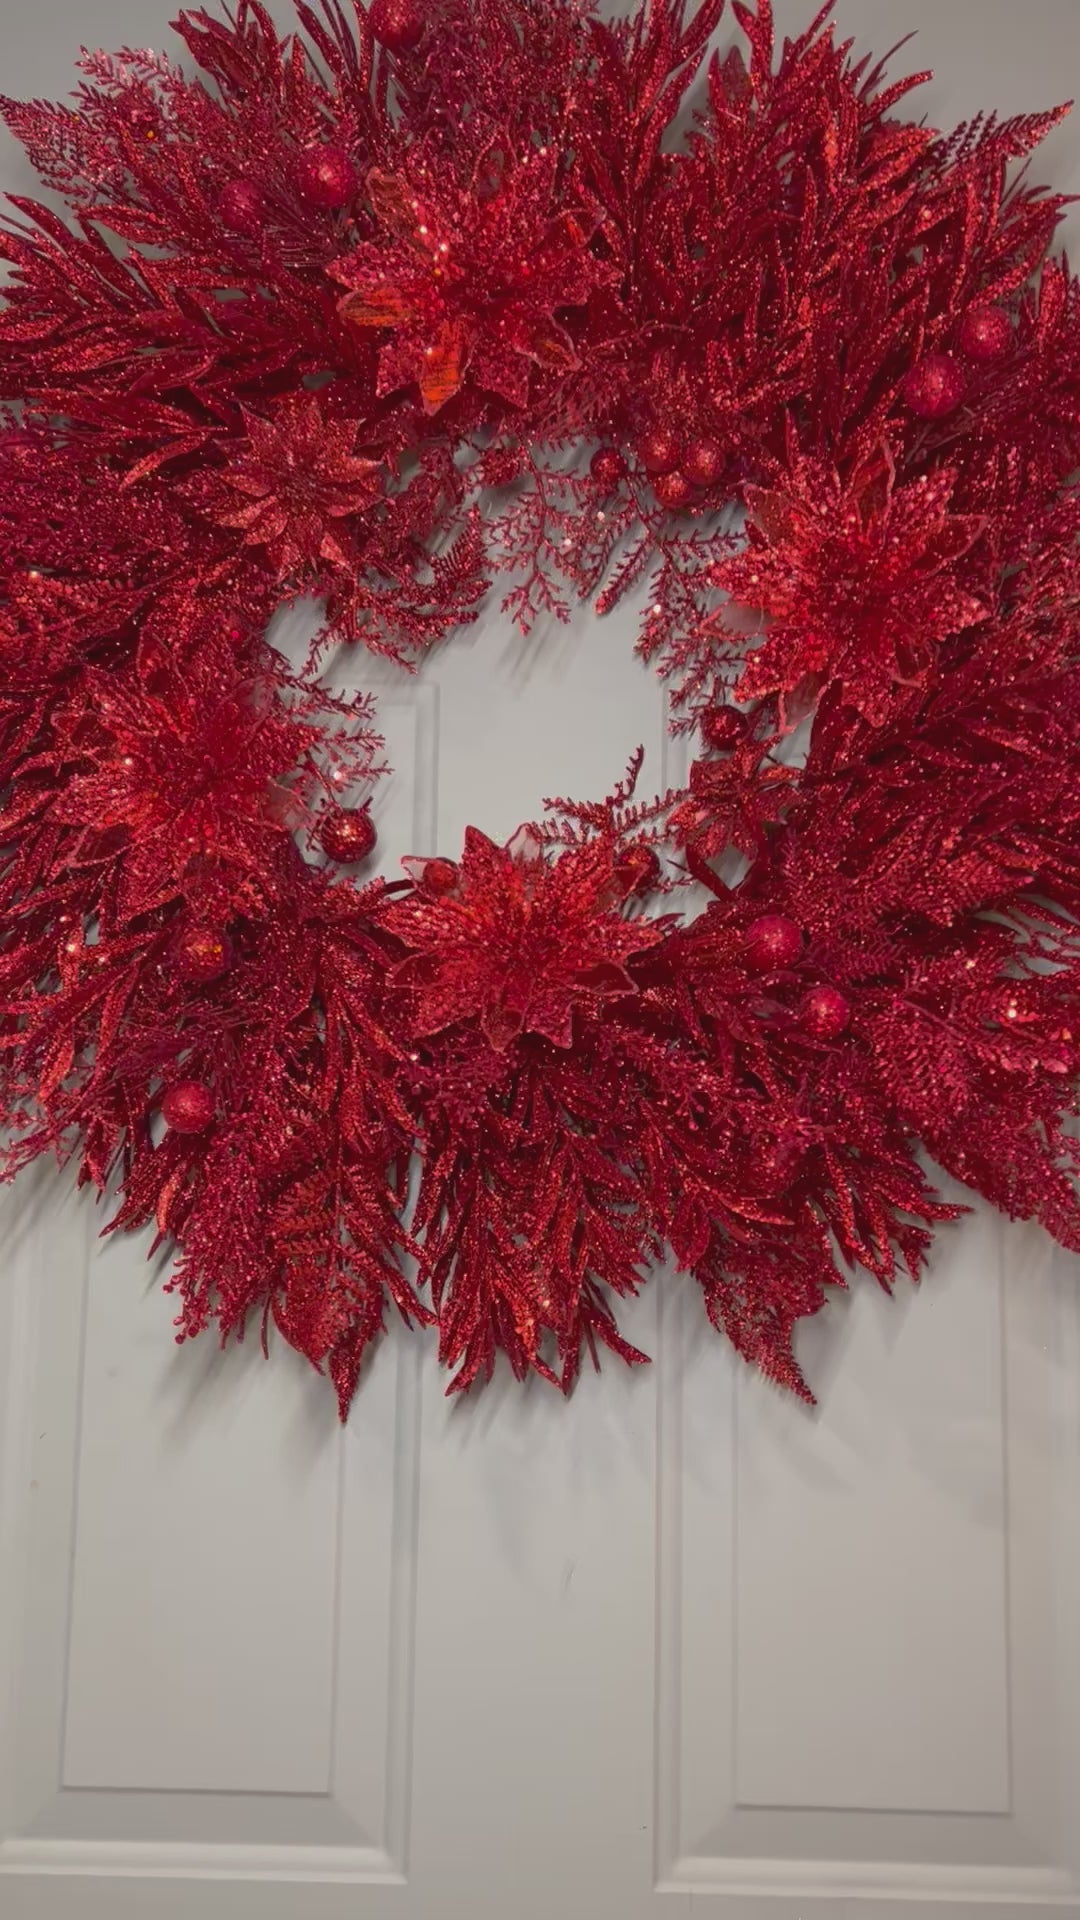 Festive Glittered-Red Bay Leaves Berry Wreath. 28" Diameter